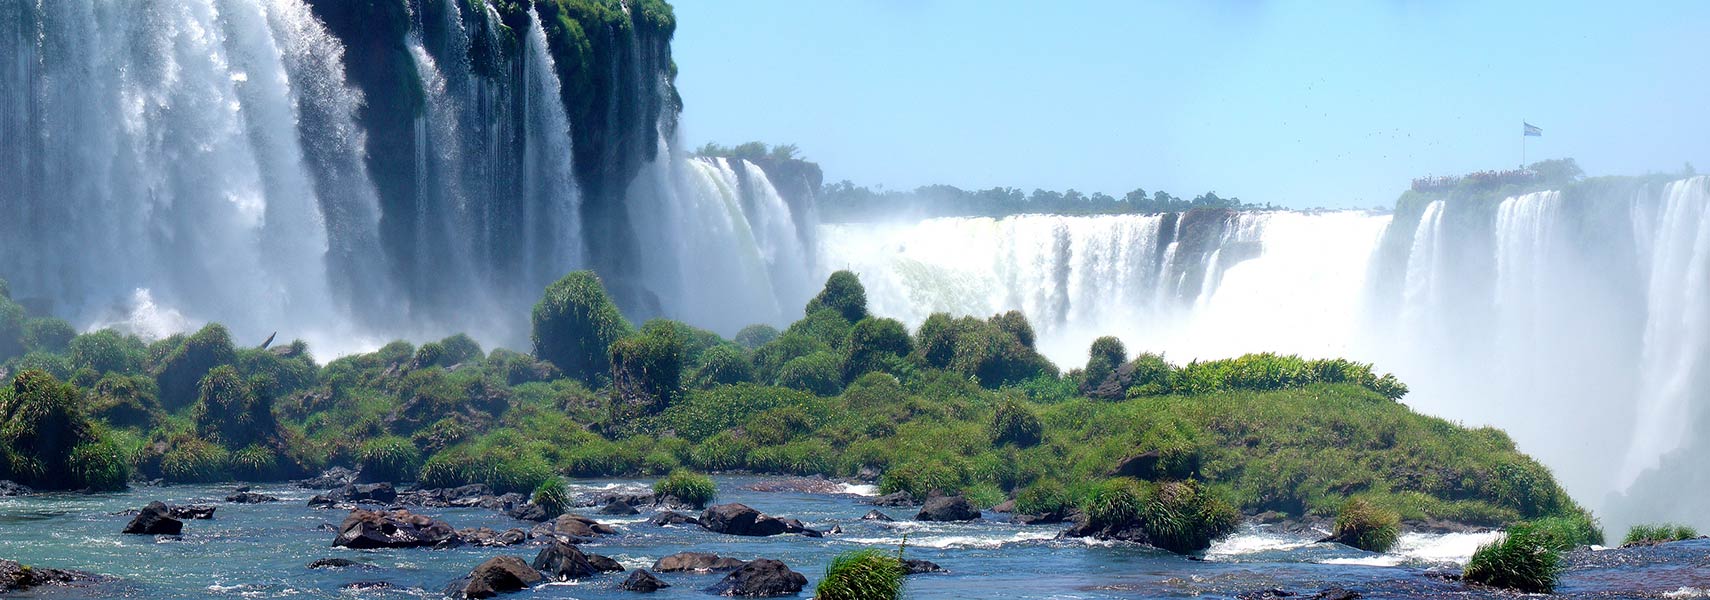 Iguazu-Falls, Brazil, Argentina